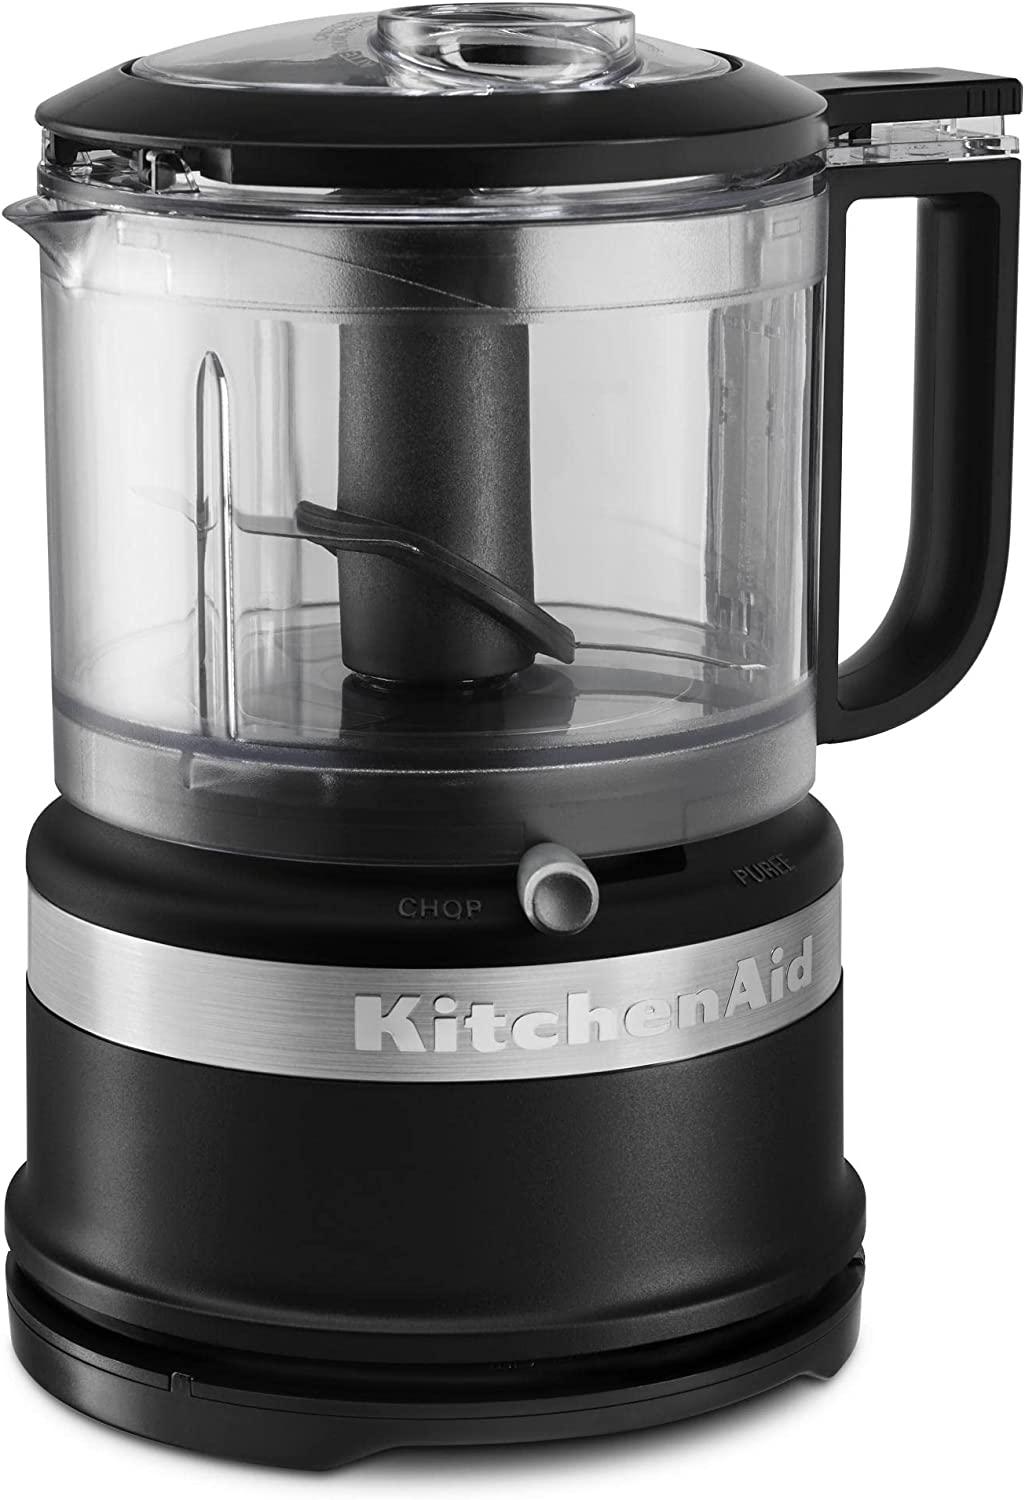 Kitchenaid Kitchenaid 3.5 cup Aqua Sky Food Processor - Whisk